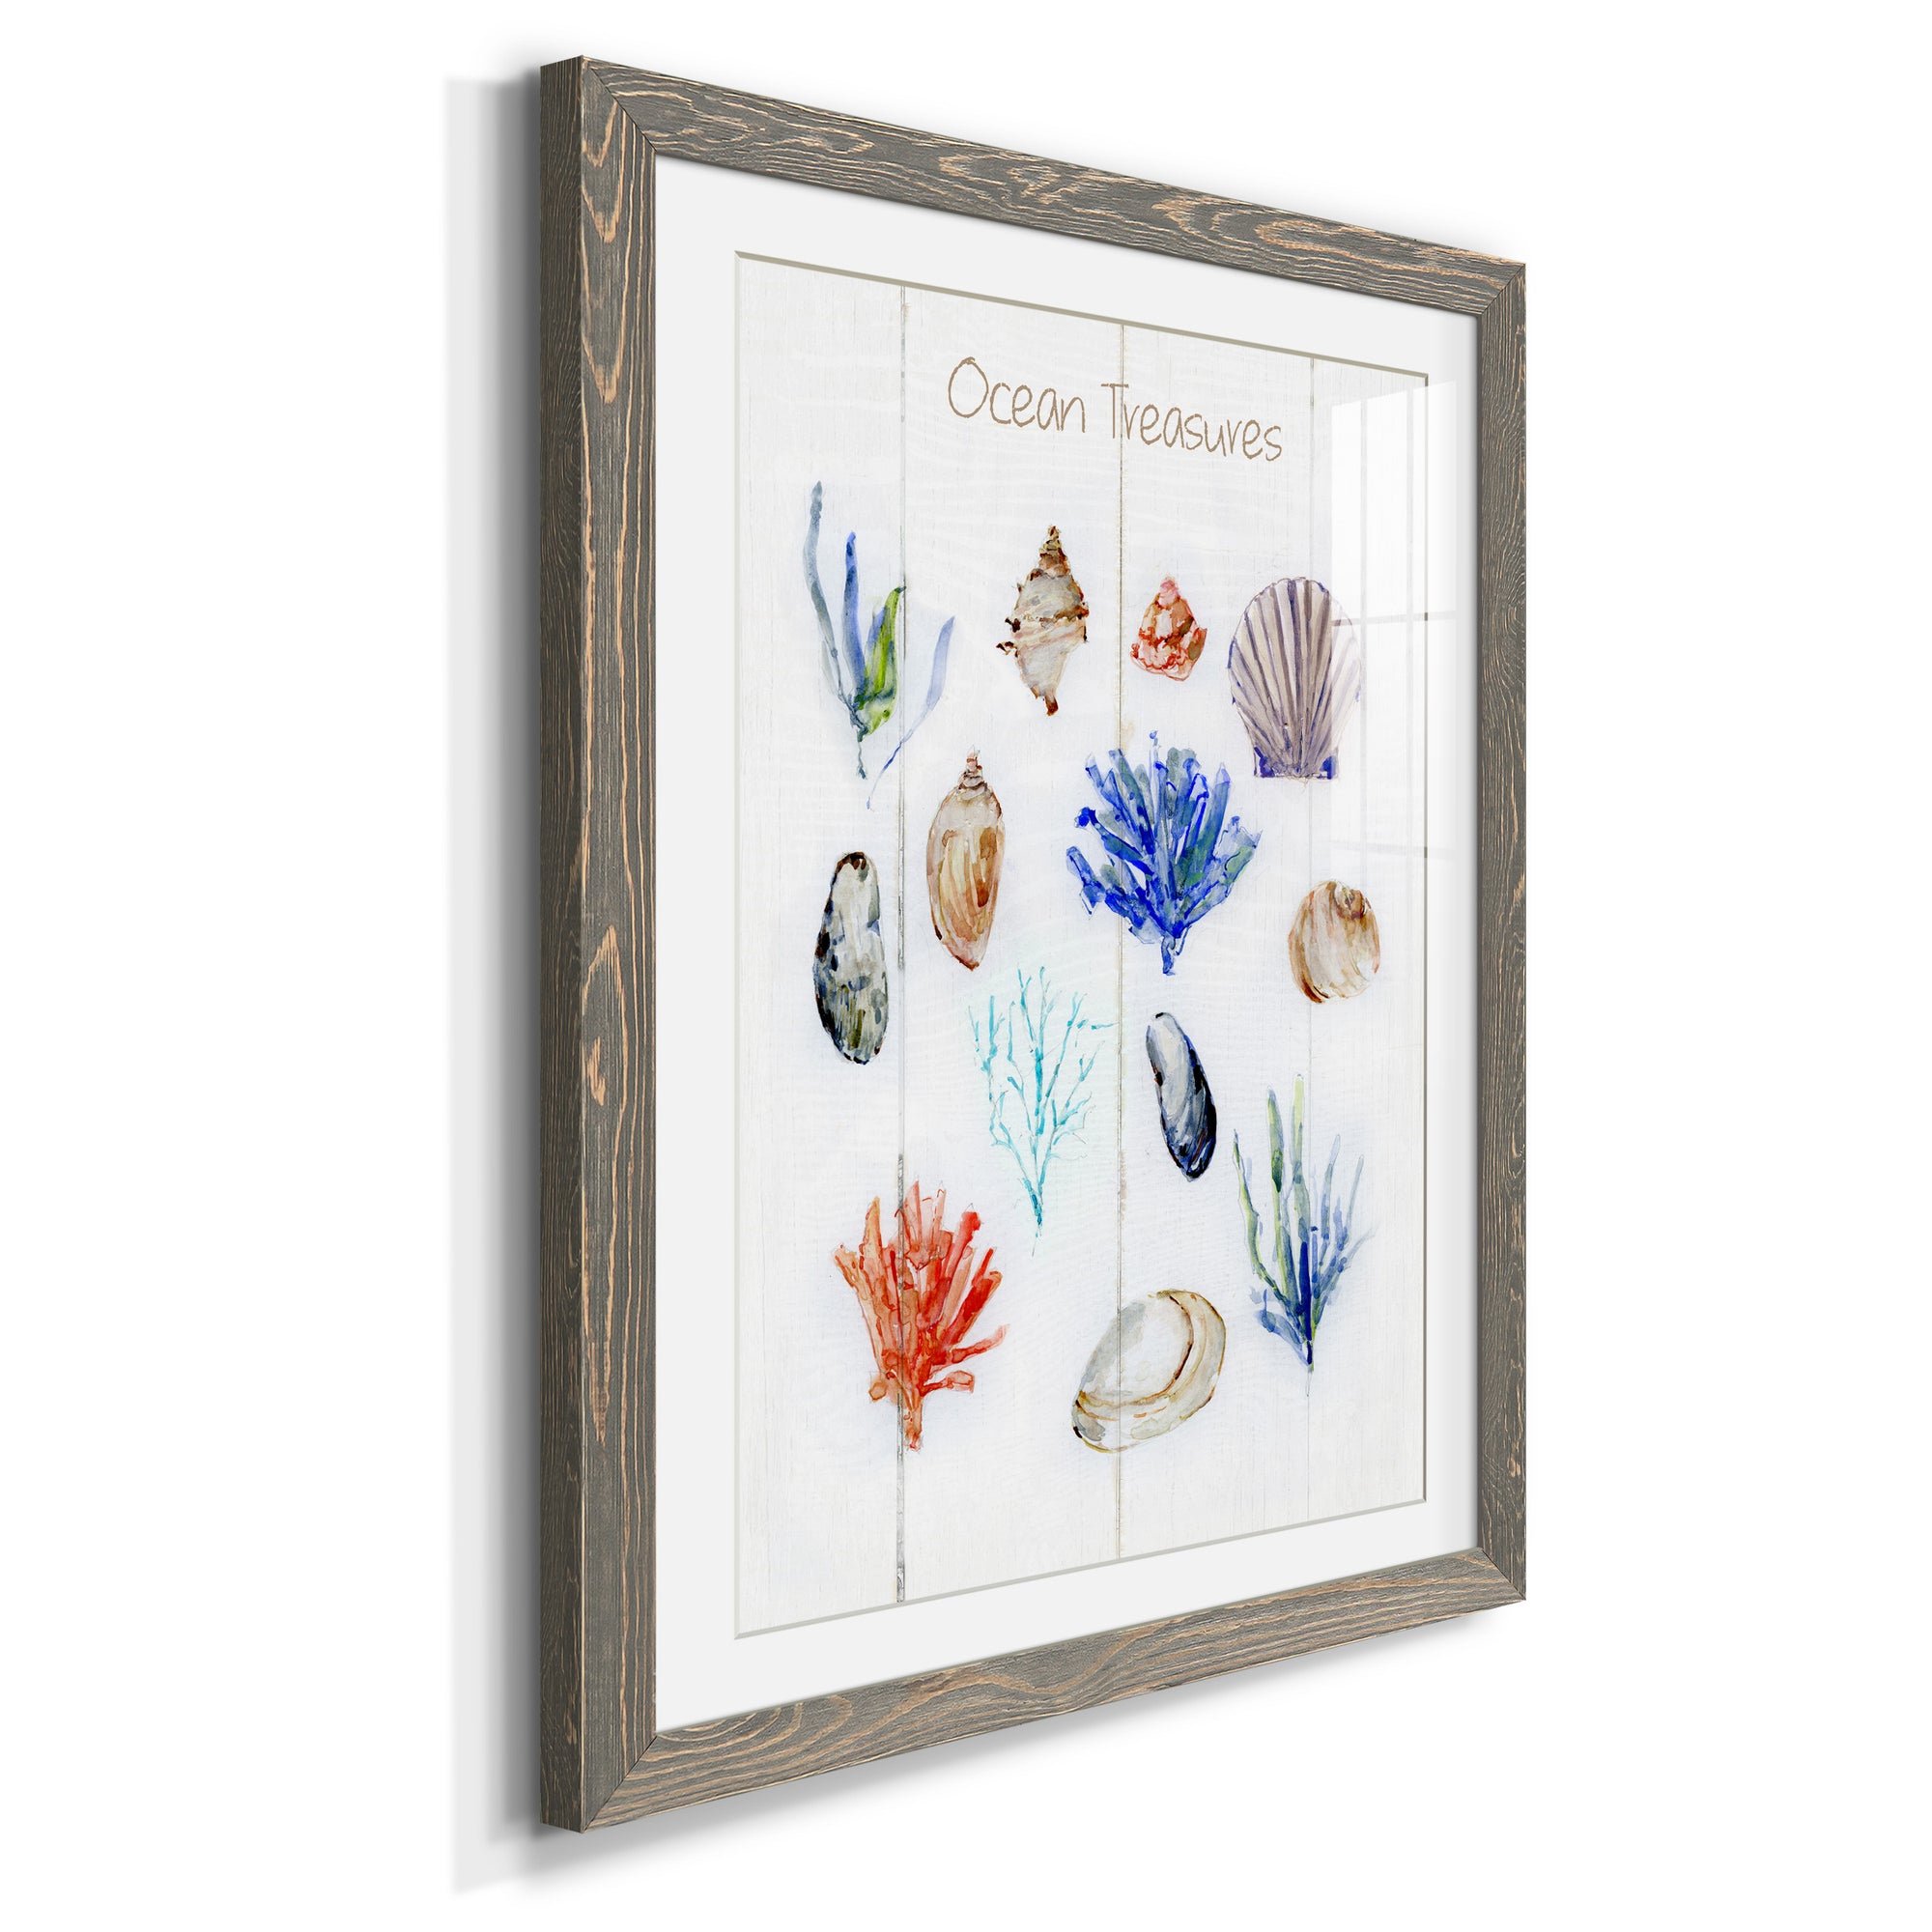 Ocean Treasures - Premium Framed Print - Distressed Barnwood Frame - Ready to Hang